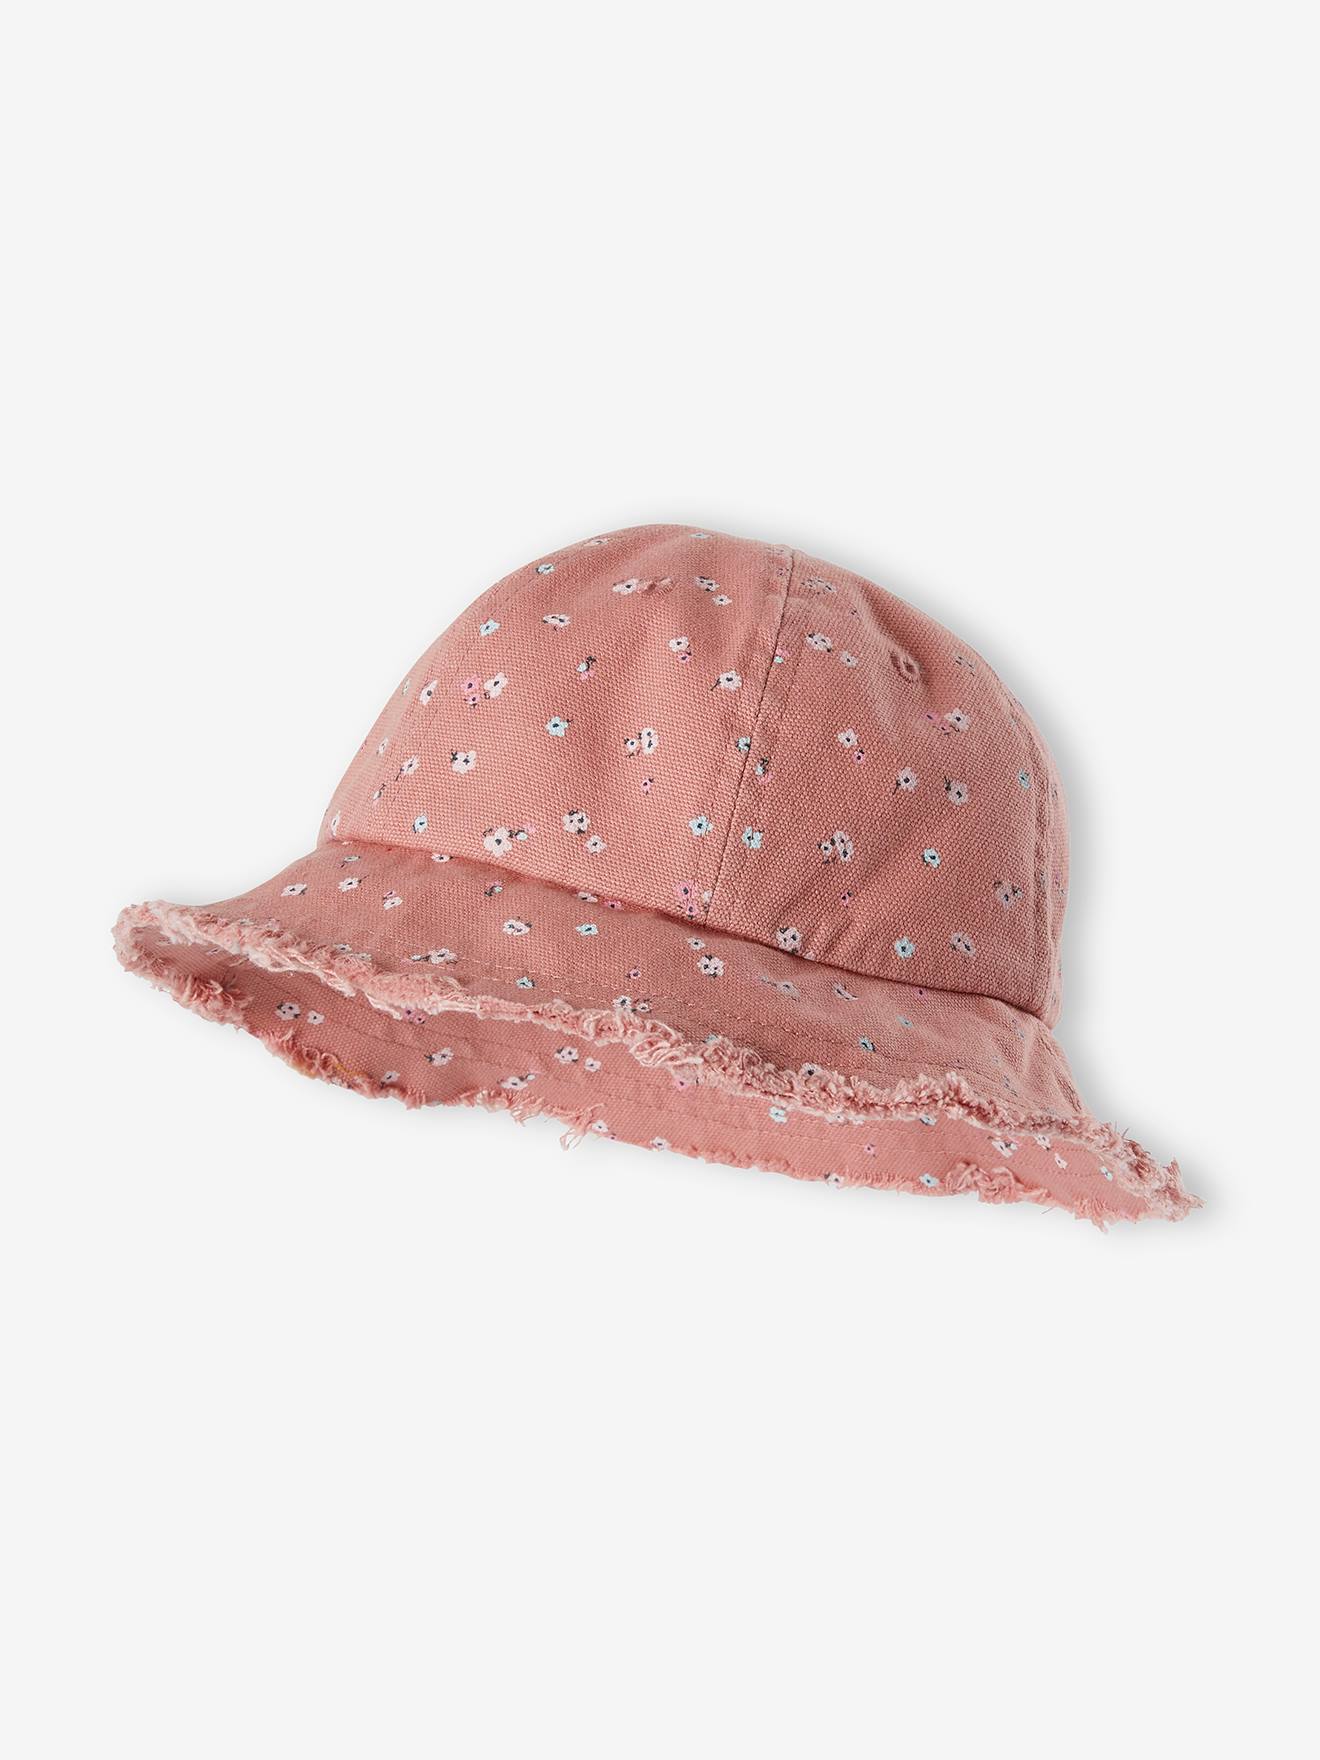 Ladies Summer Floral Bucket Hat Pale Blue or Pink A1389 